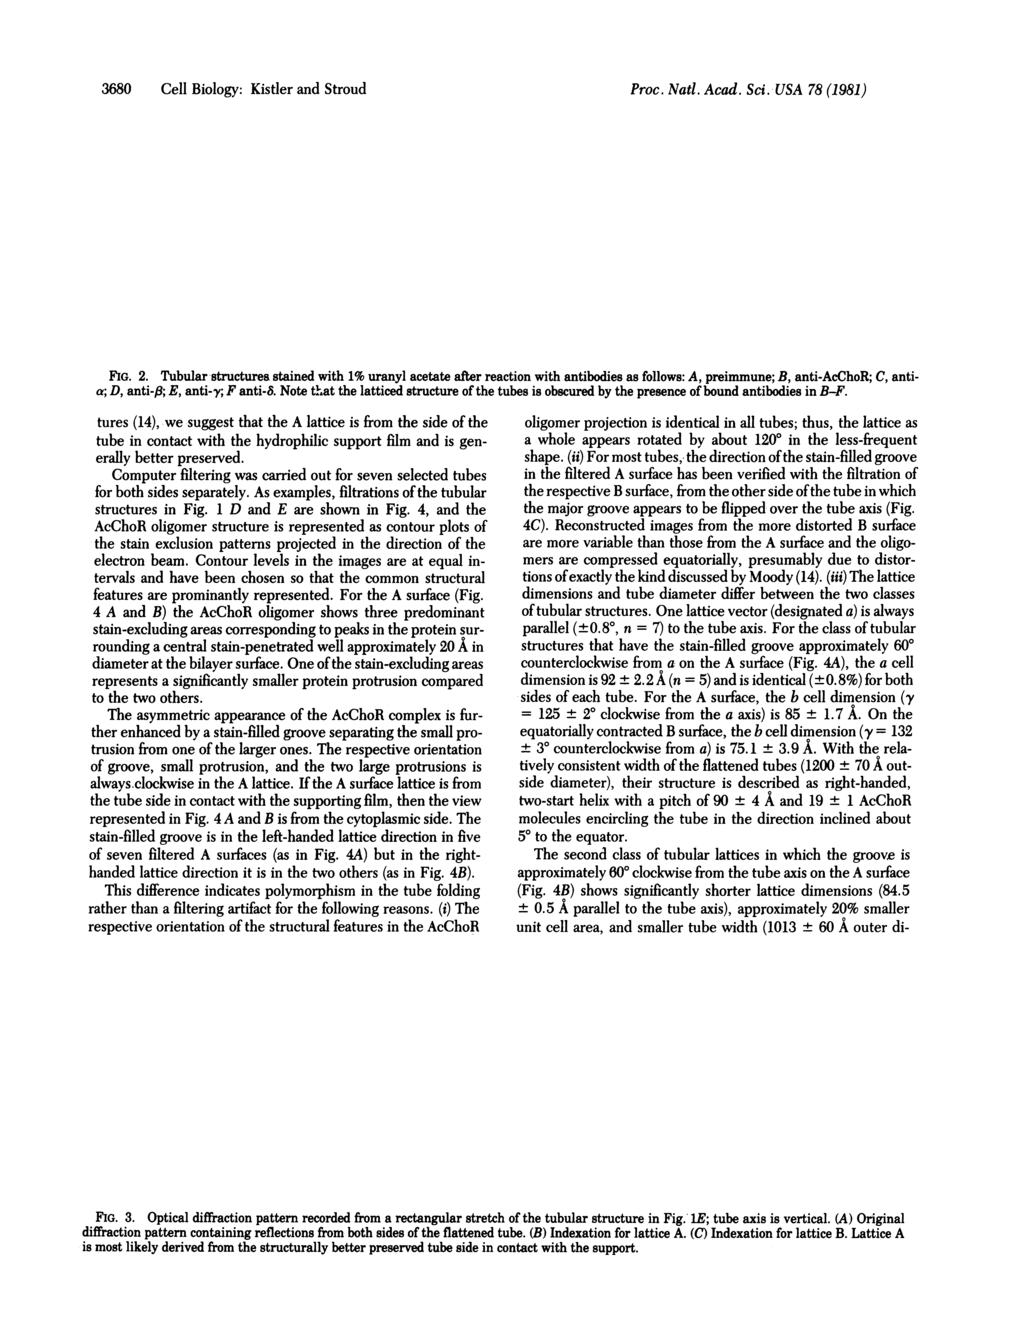 3680 Cell Biology: Kistler and Stroud Proc. Natl. Acad. Sci. USA 78 (1981) FIG. 2.